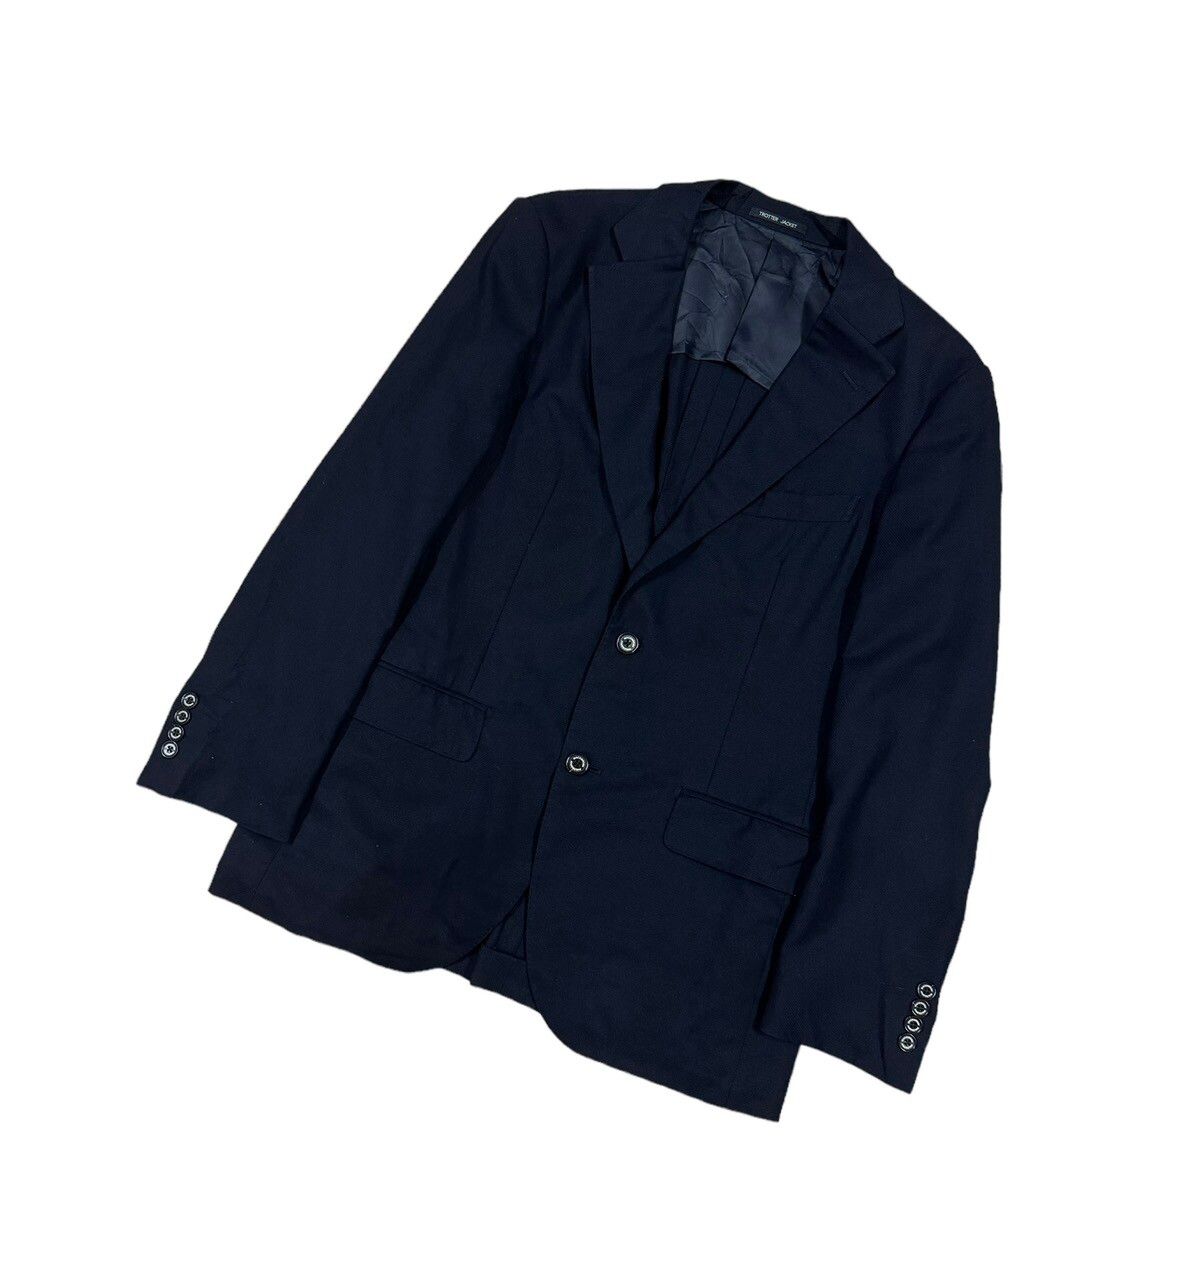 Mackintosh Philosophy Blazer Jacket Suit - 6